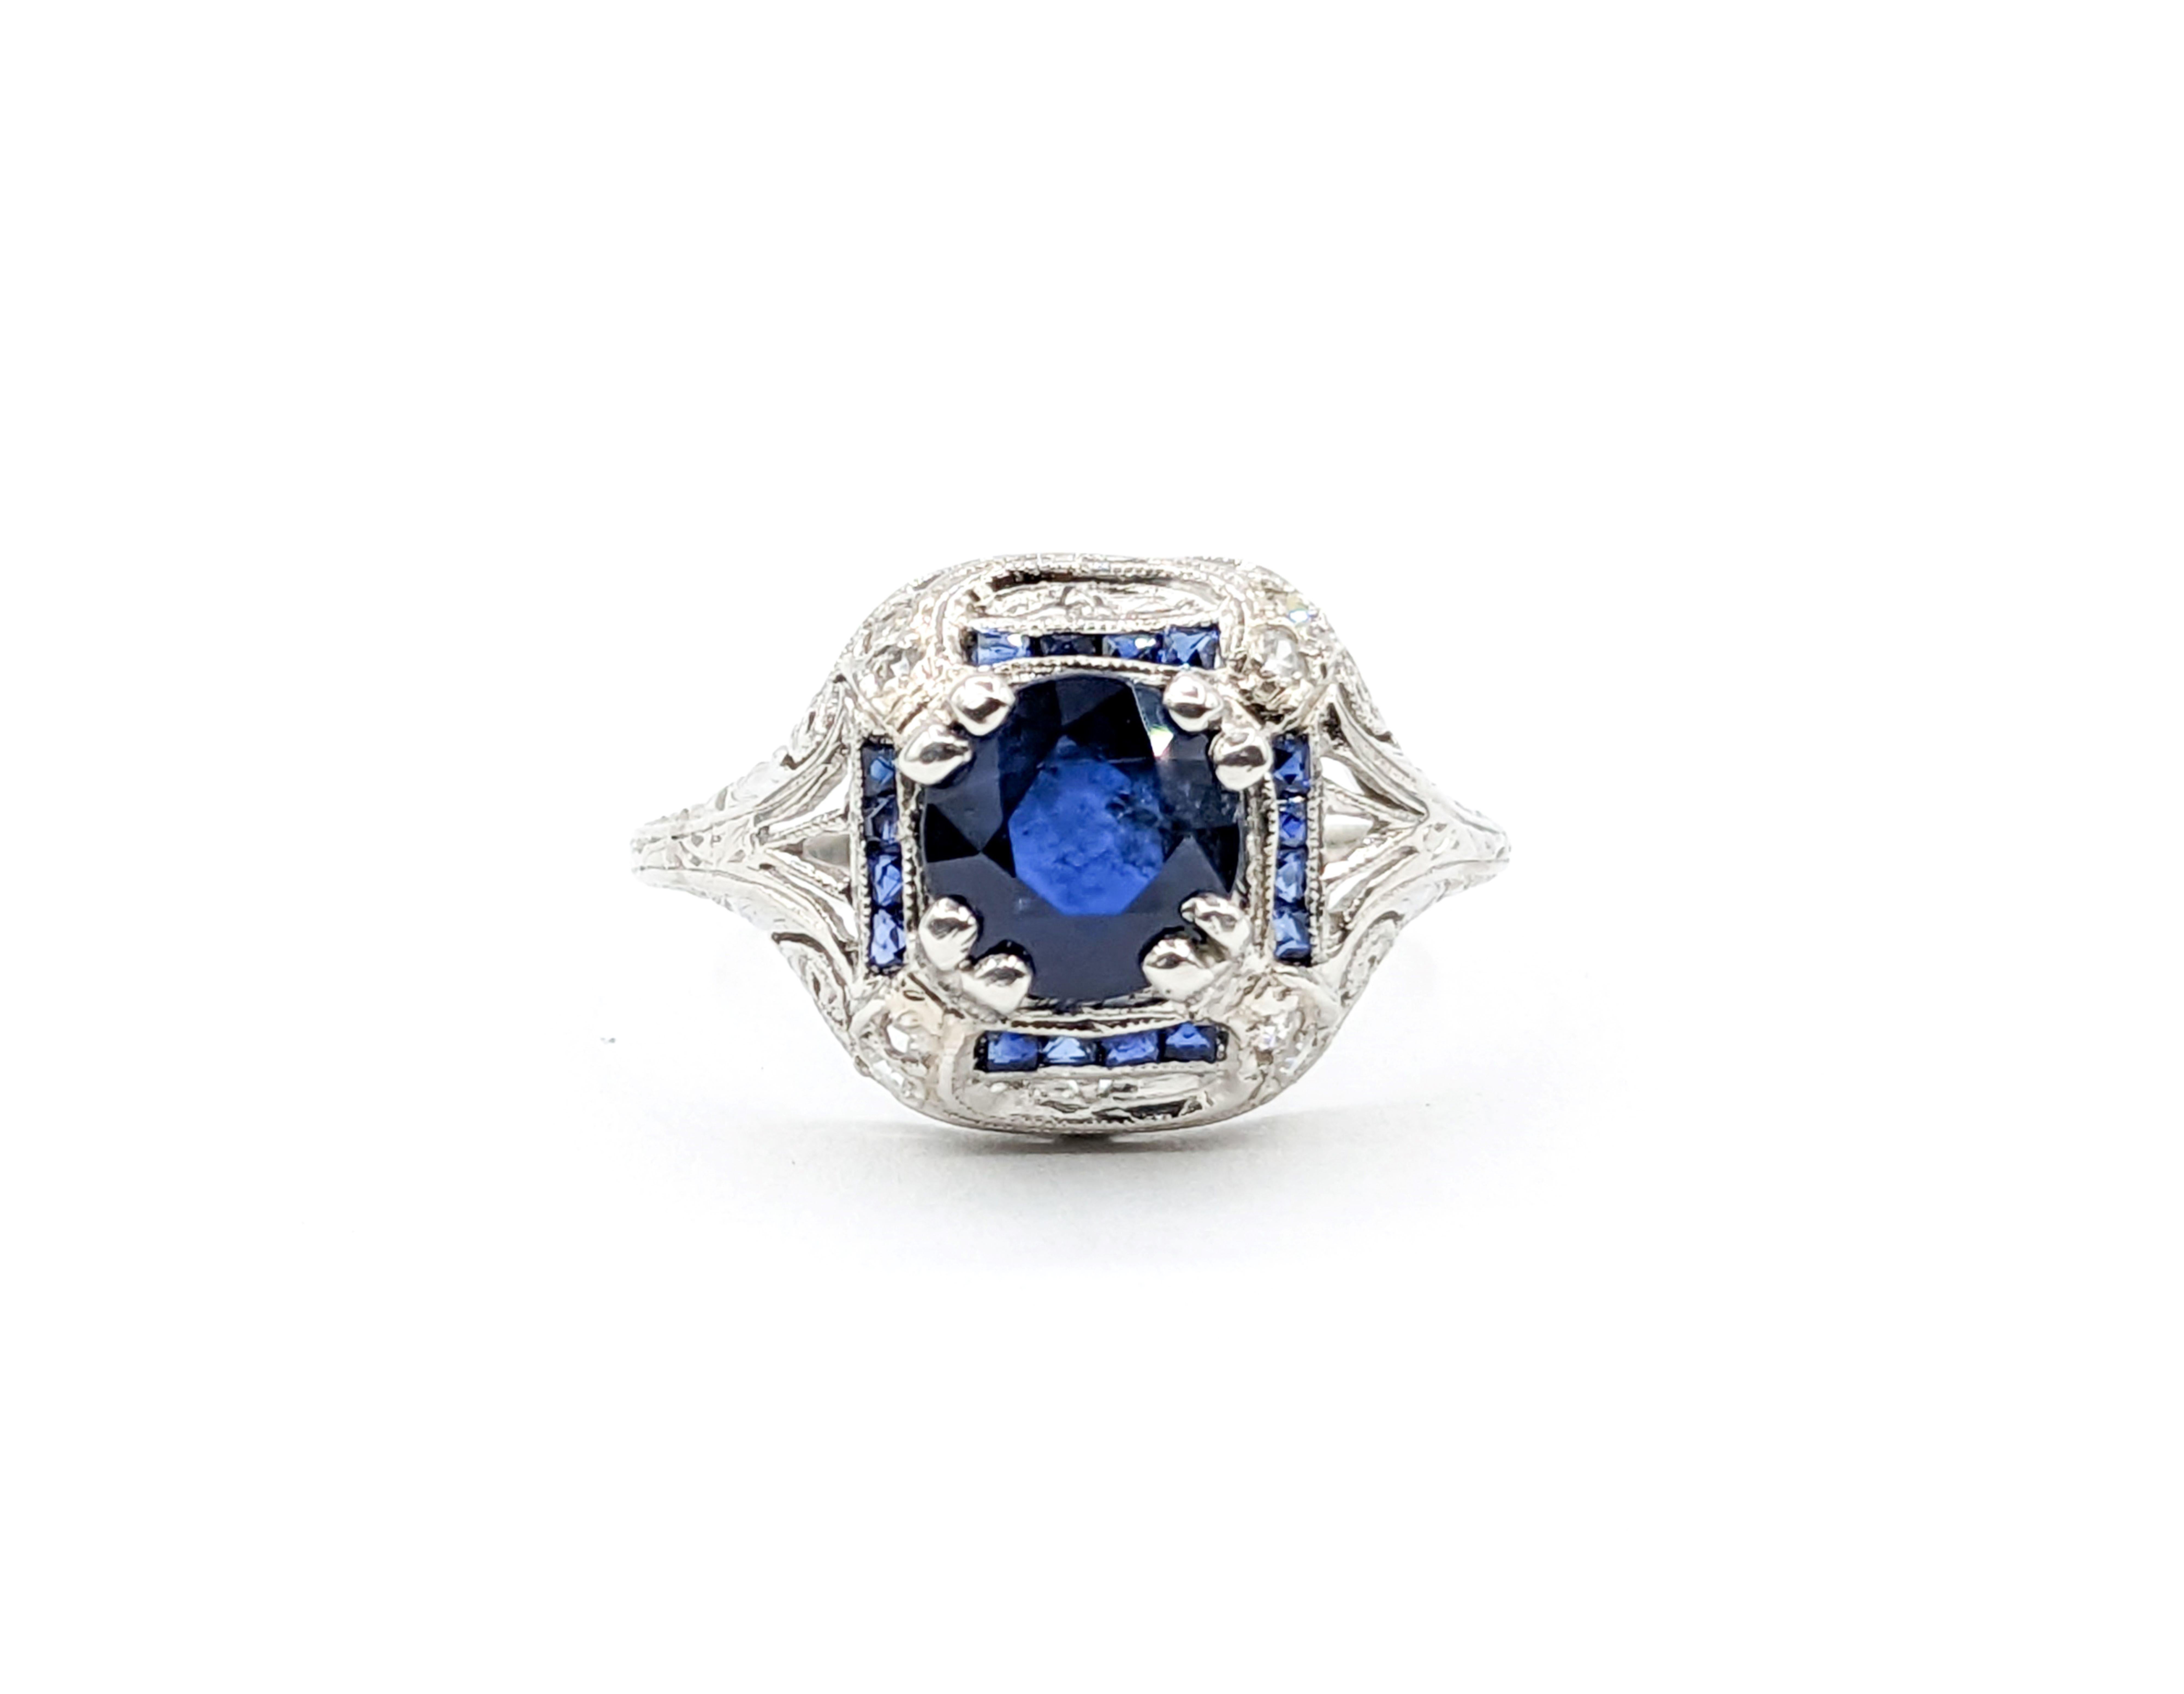 Round Cut Fantastic Antique Art Deco Ring with Sapphire and Diamonds in Platinum Filigree